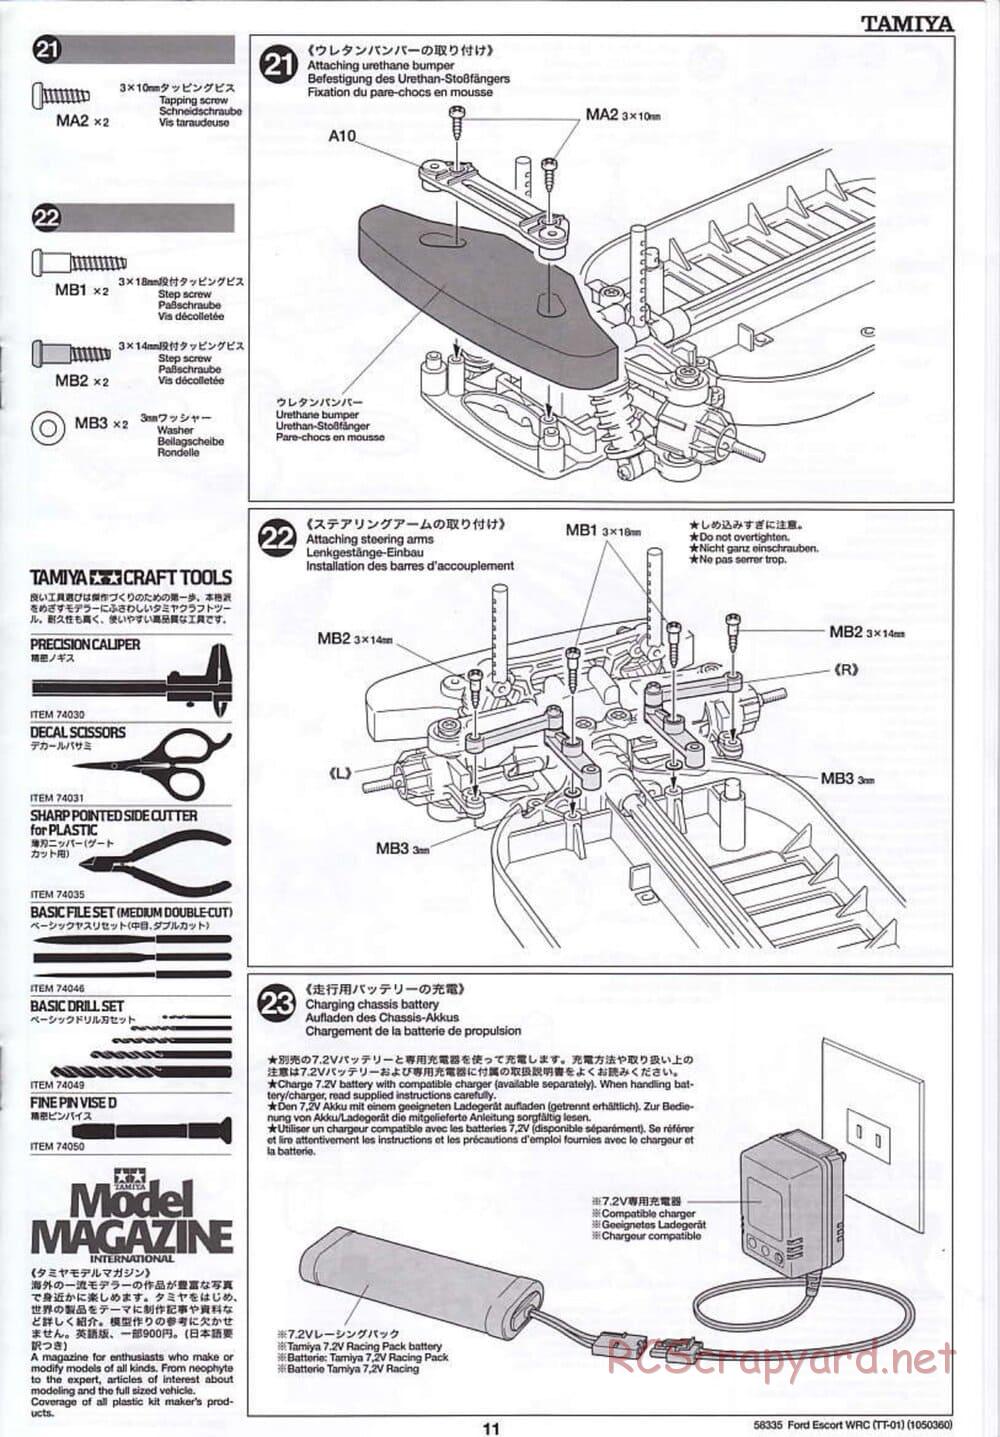 Tamiya - Ford Escort WRC - TT-01 Chassis - Manual - Page 11